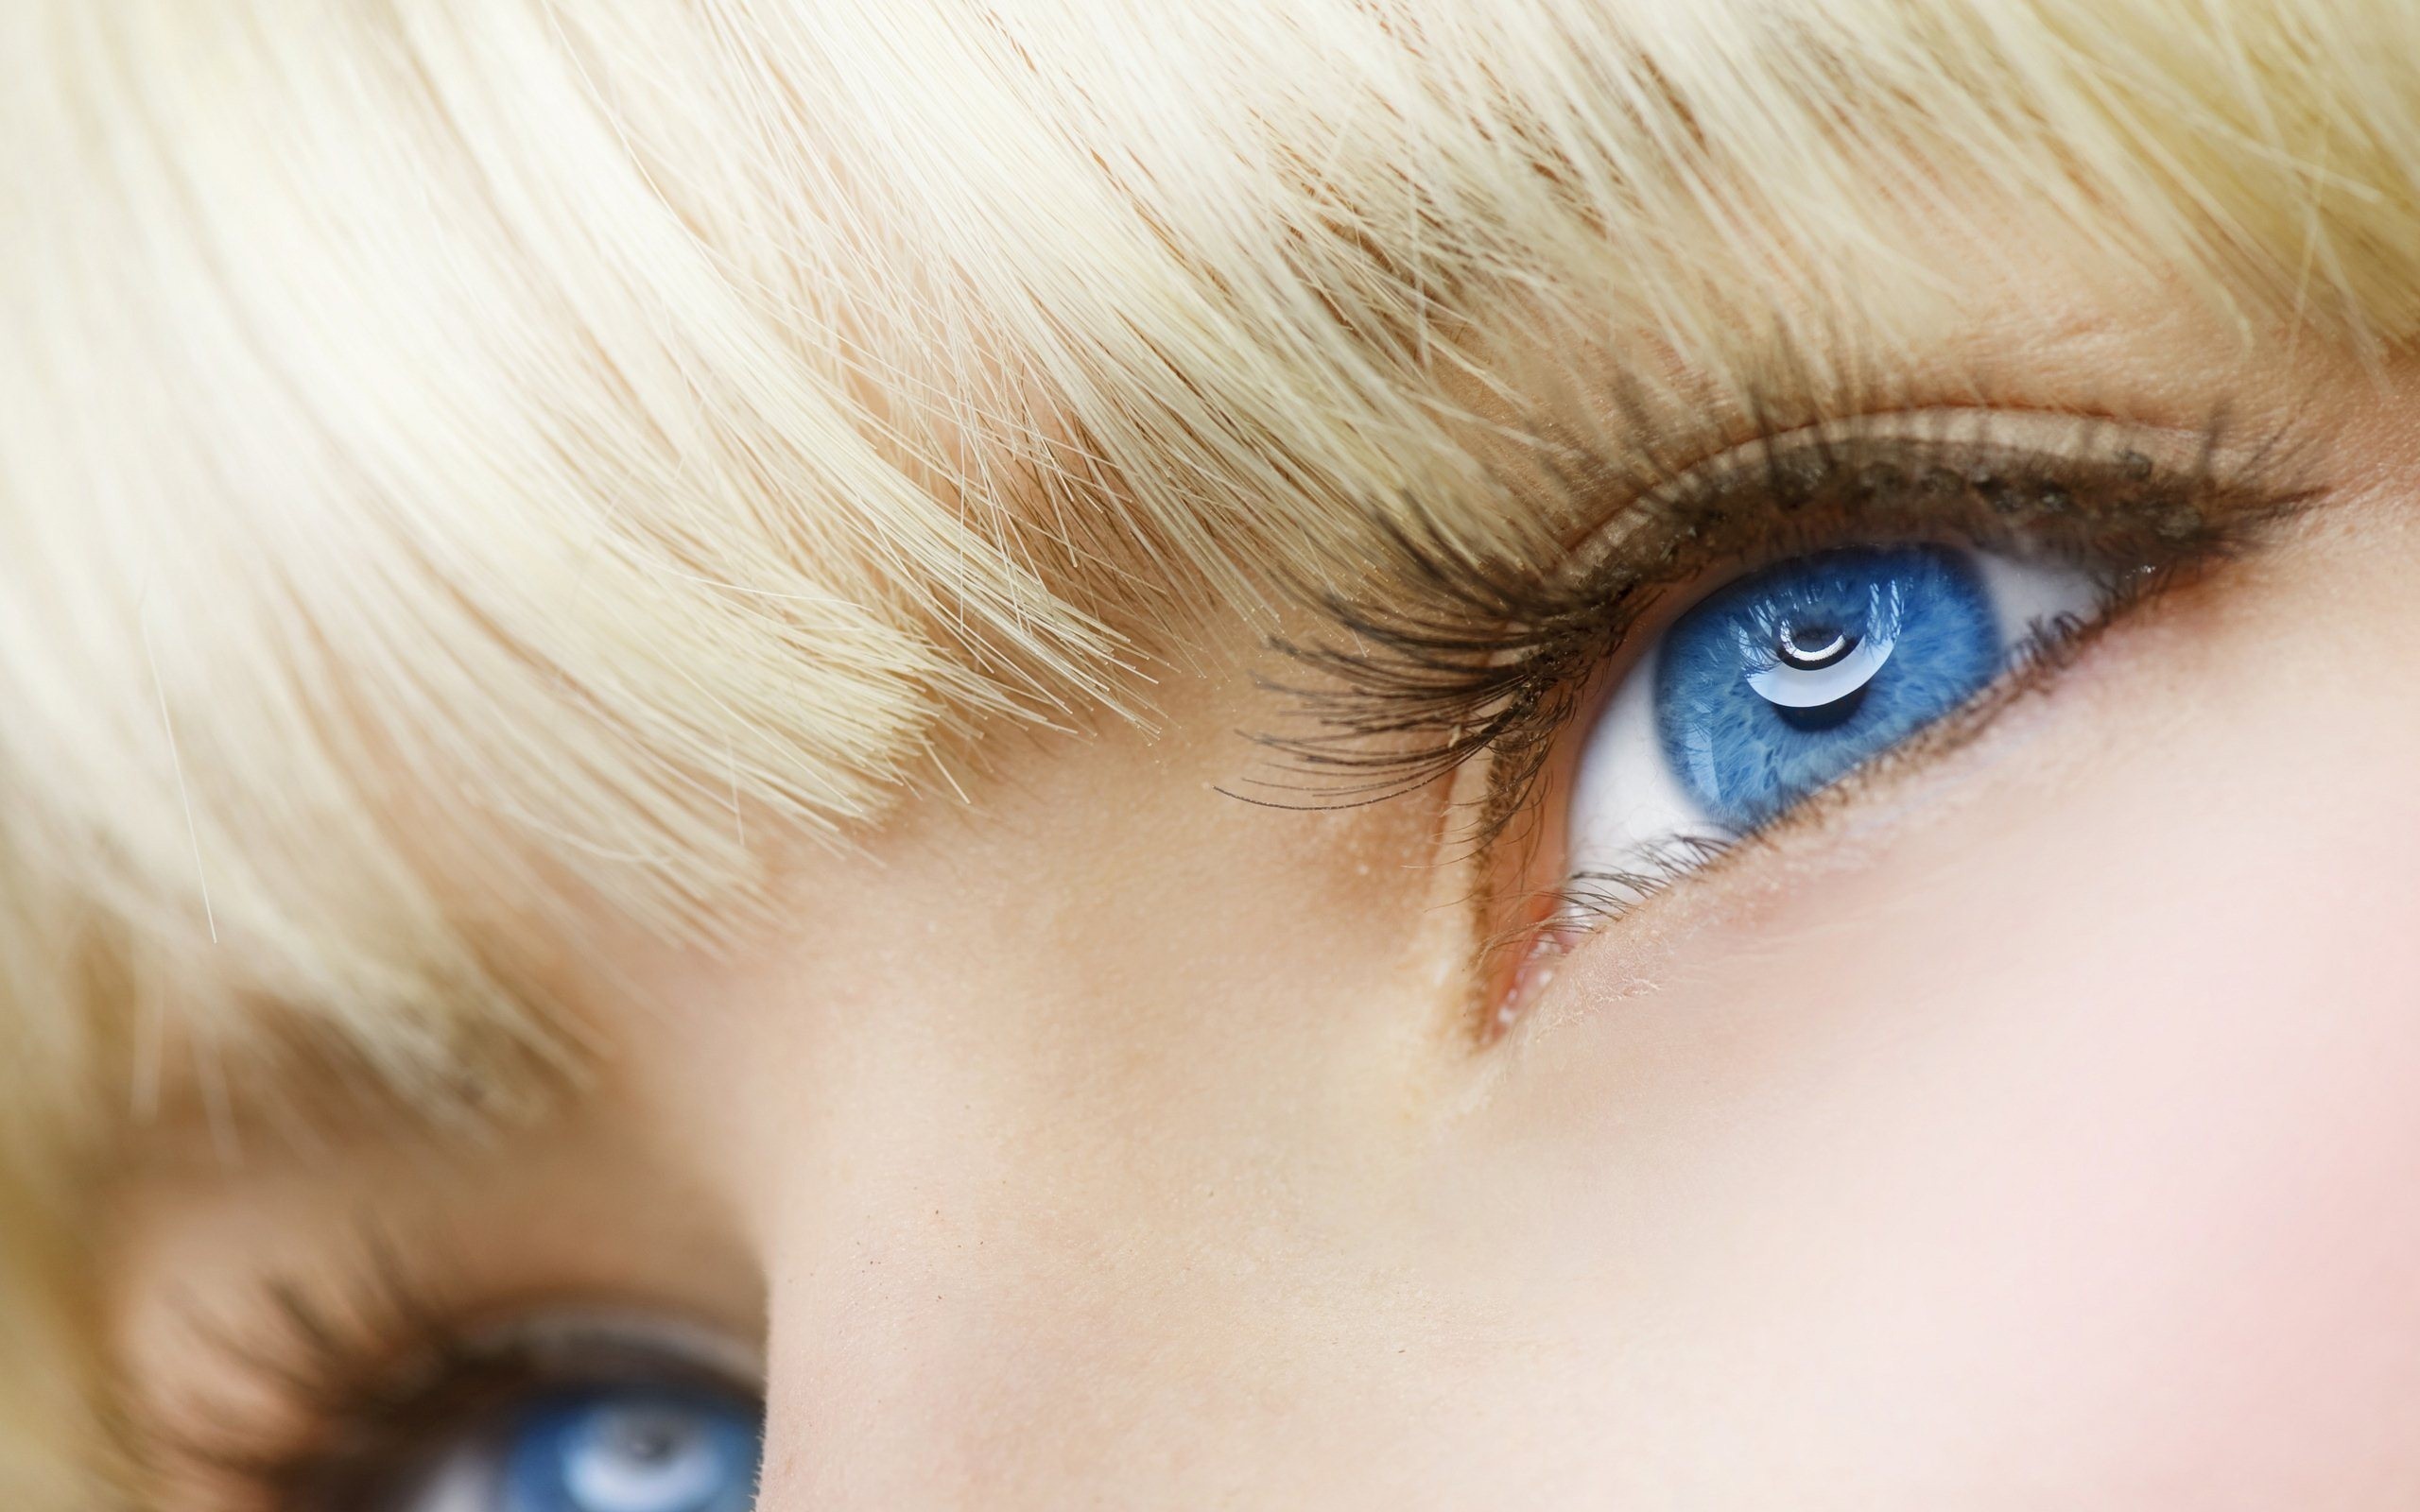 blondes, women, blue eyes, faces - desktop wallpaper